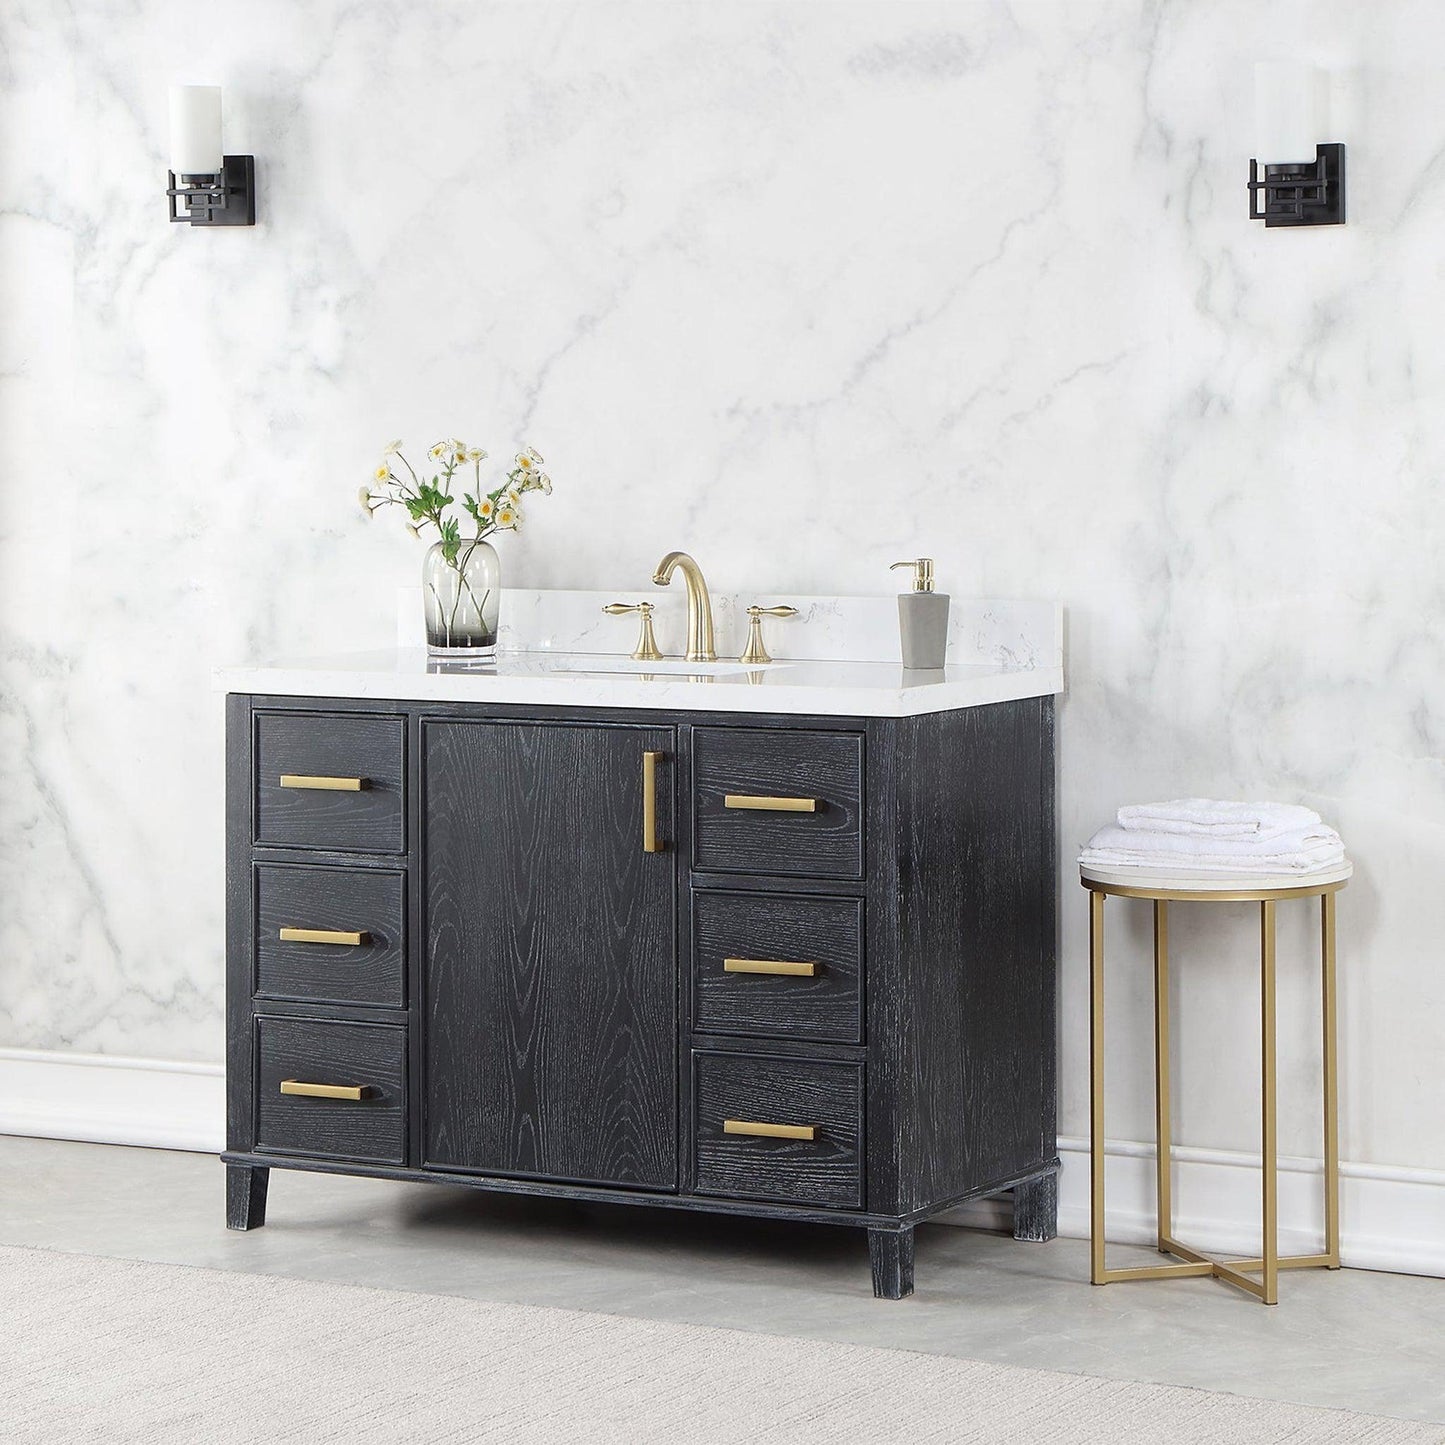 Altair Weiser 48" Black Oak Freestanding Single Bathroom Vanity Set With Aosta White Composite Stone Top, Single Rectangular Undermount Ceramic Sink, Overflow, and Backsplash